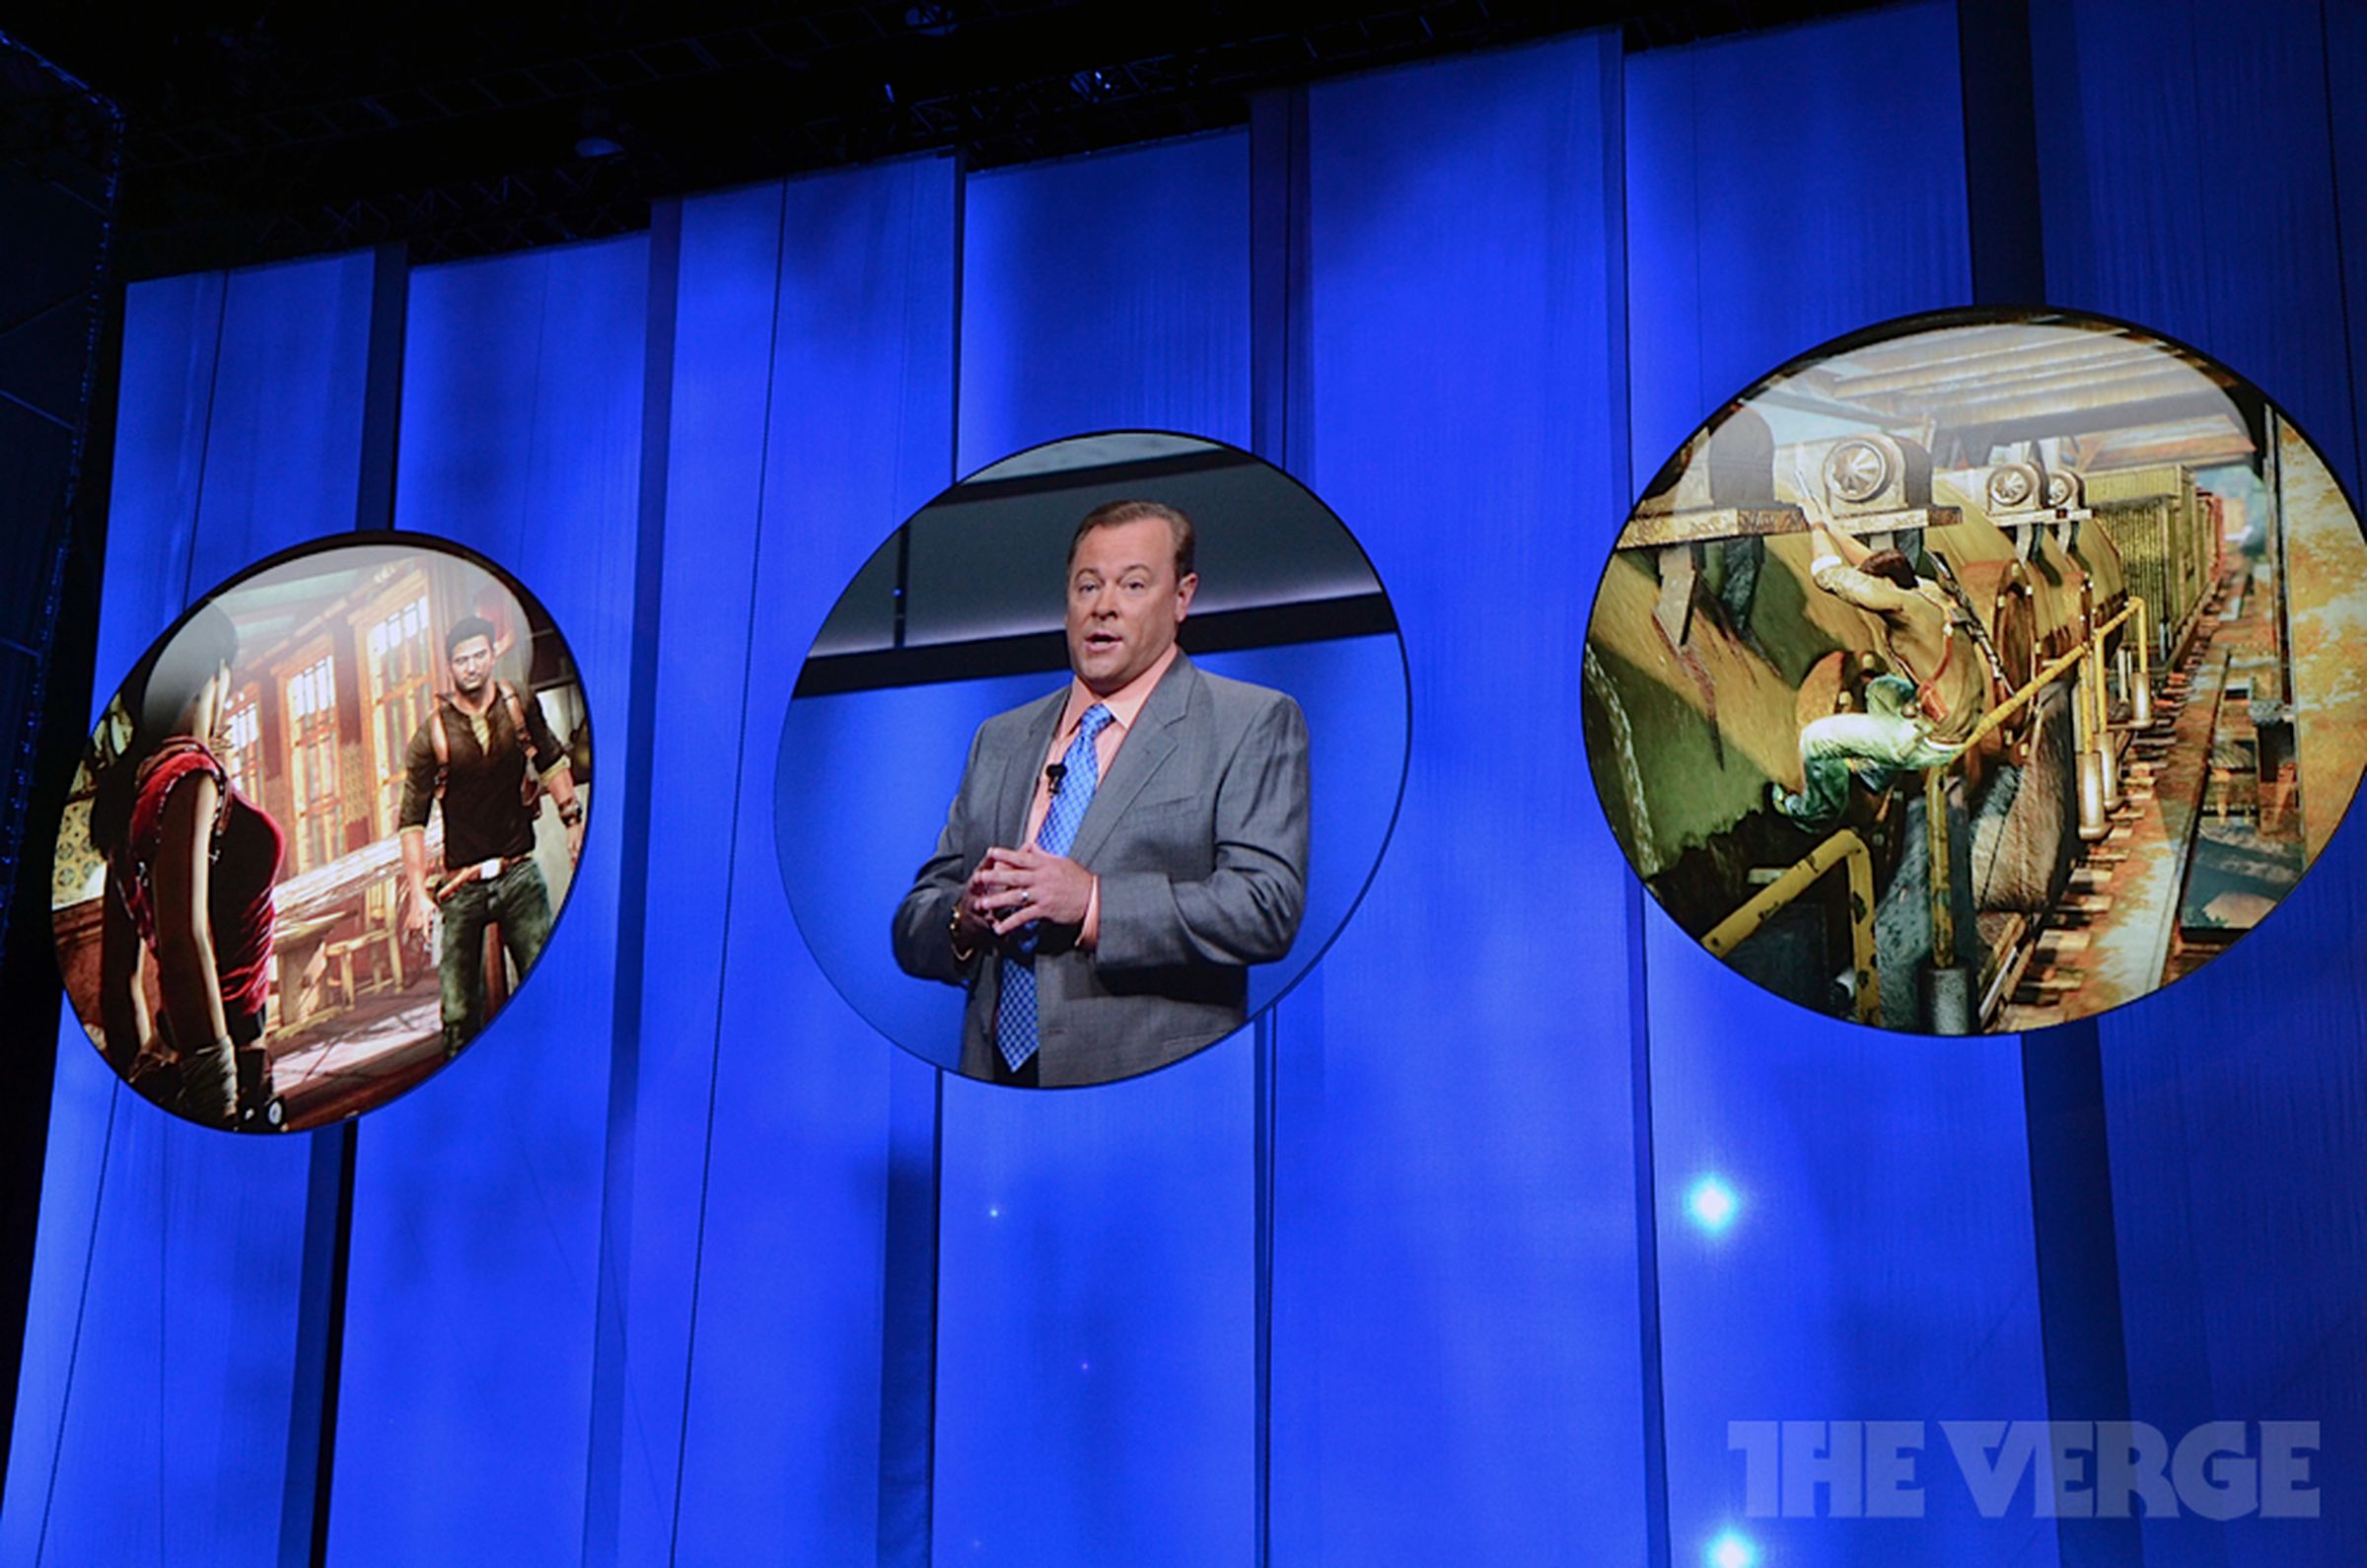 Sony's E3 2011 keynote highlights